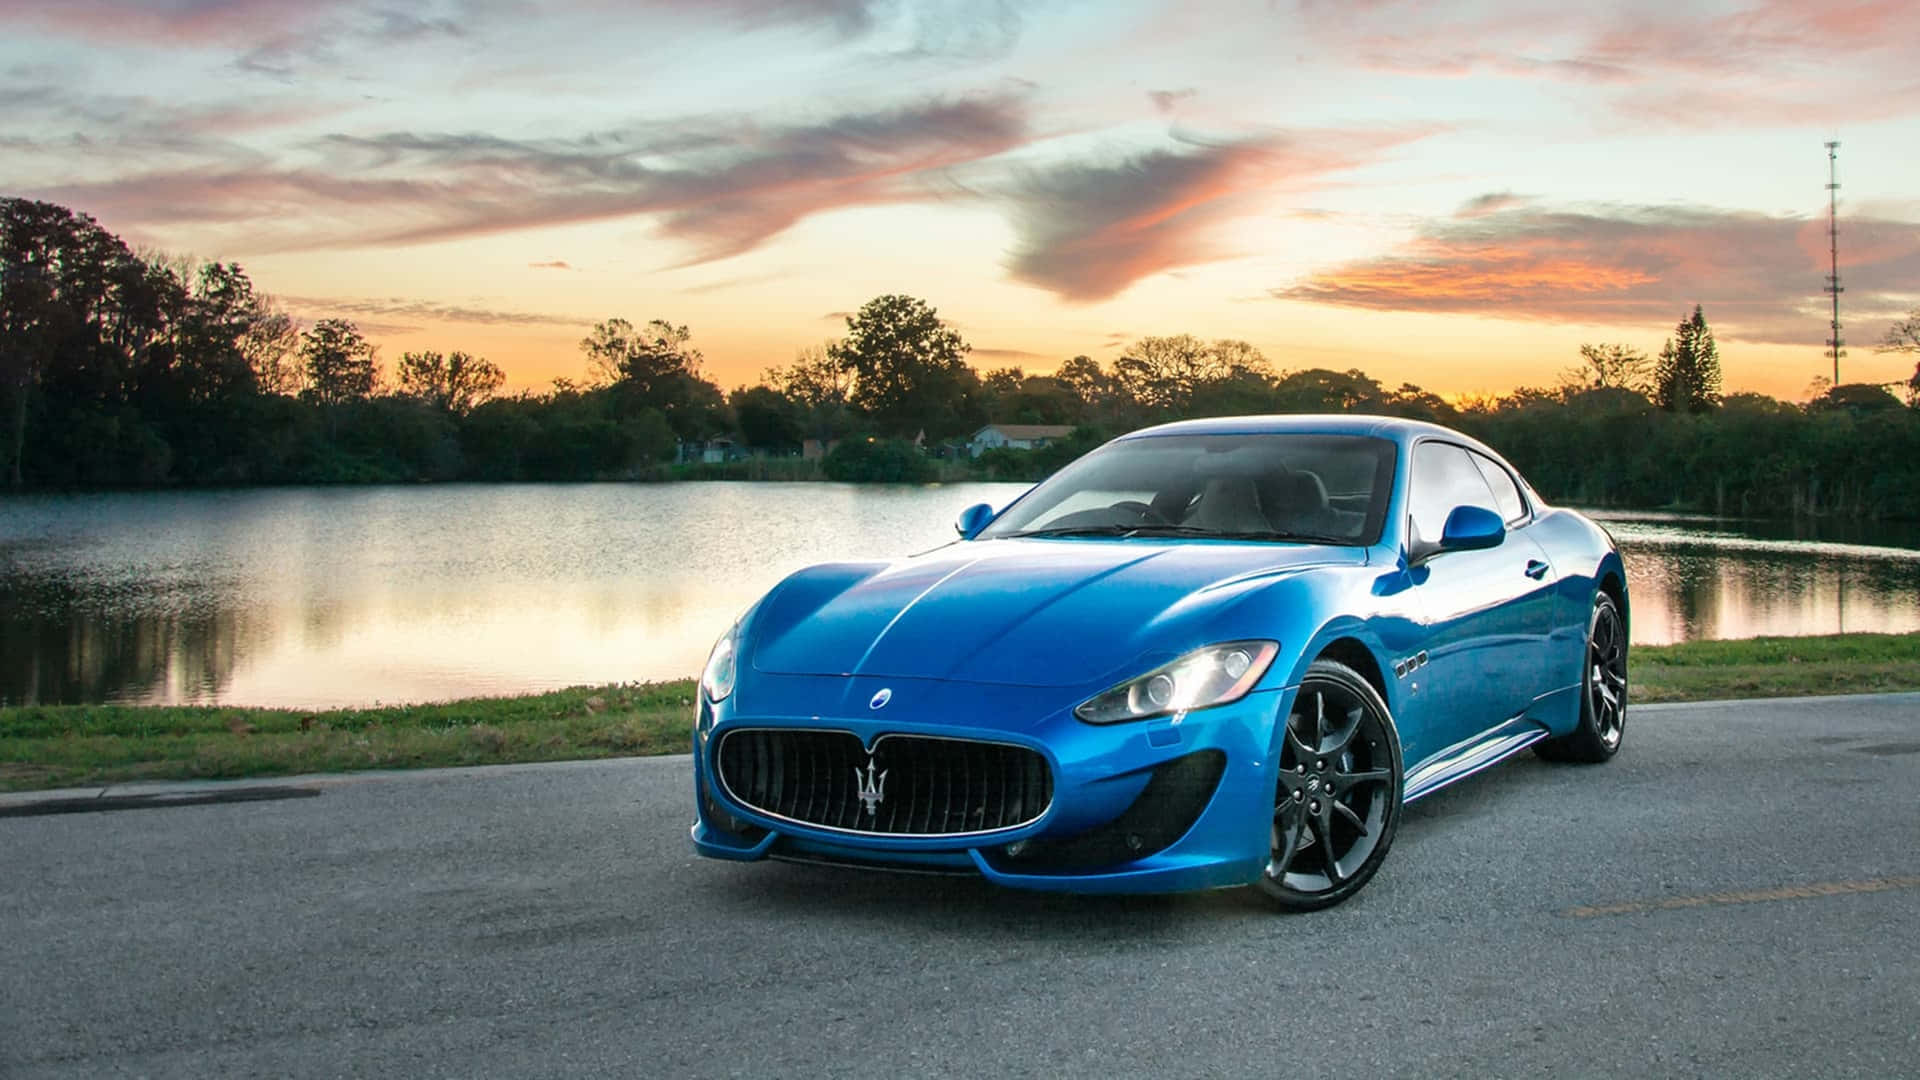 Dasultimative Fahrerlebnis: Der Prächtige 4k Maserati Wallpaper